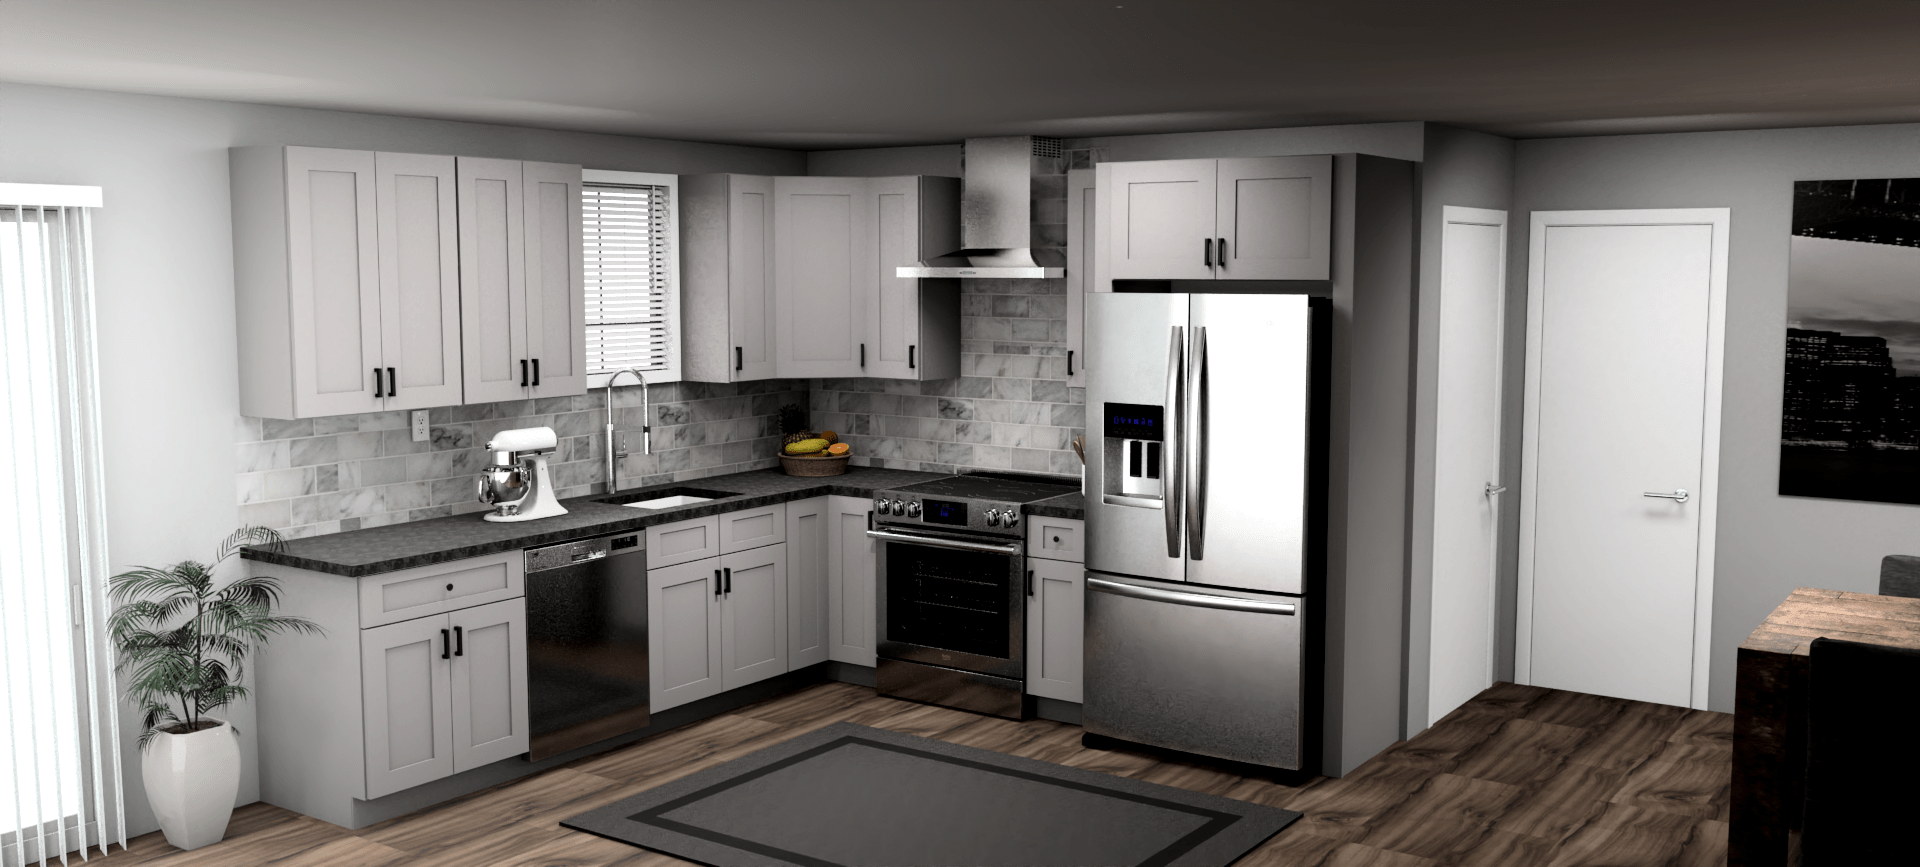 Fabuwood Allure Galaxy Nickel 10 x 10 L Shaped Kitchen Main Layout Photo